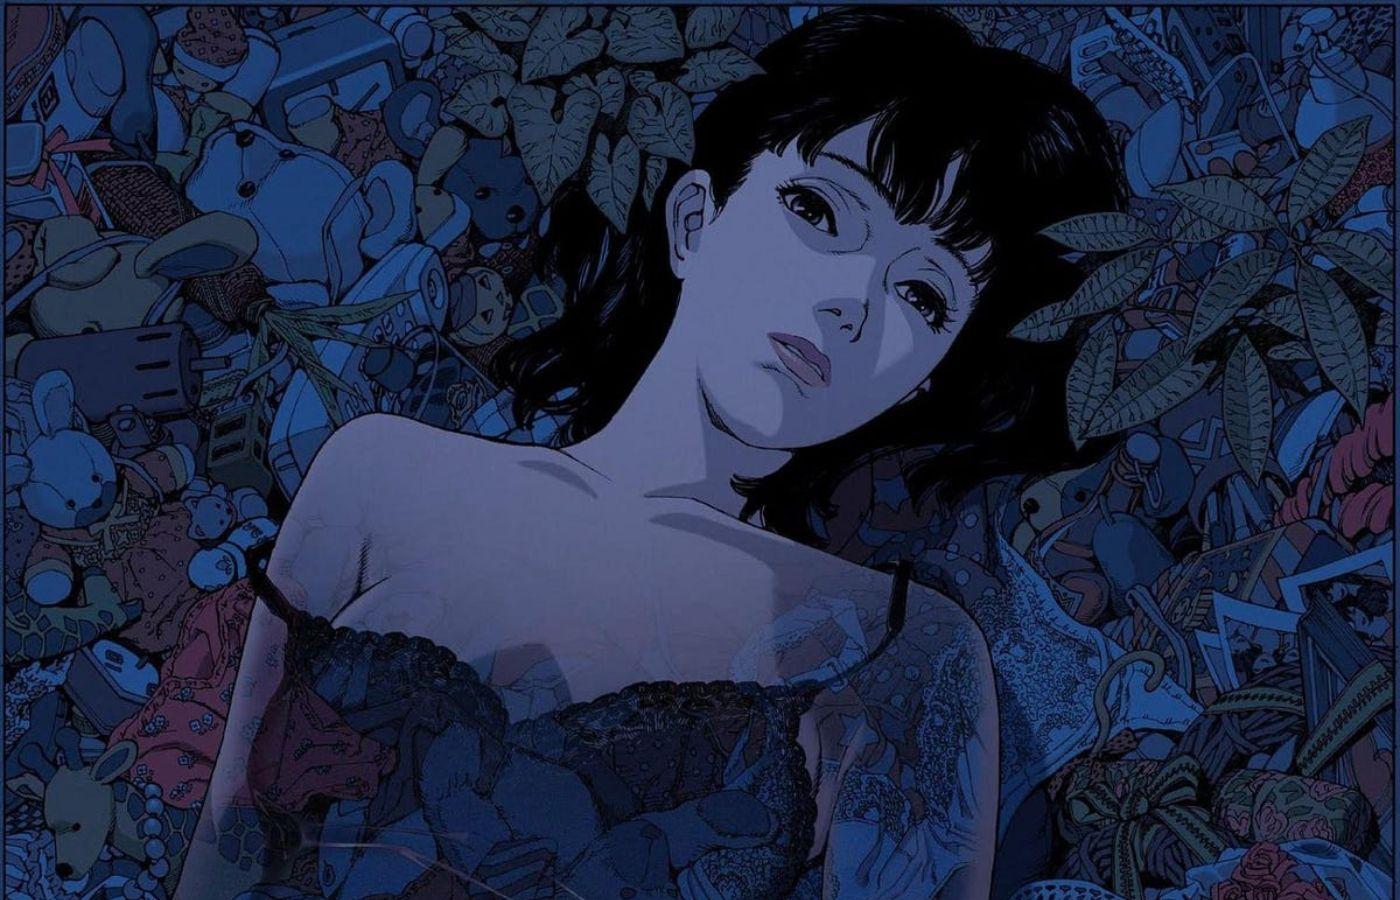 A still from Satoshi Kon's anime movie Perfect Blue.